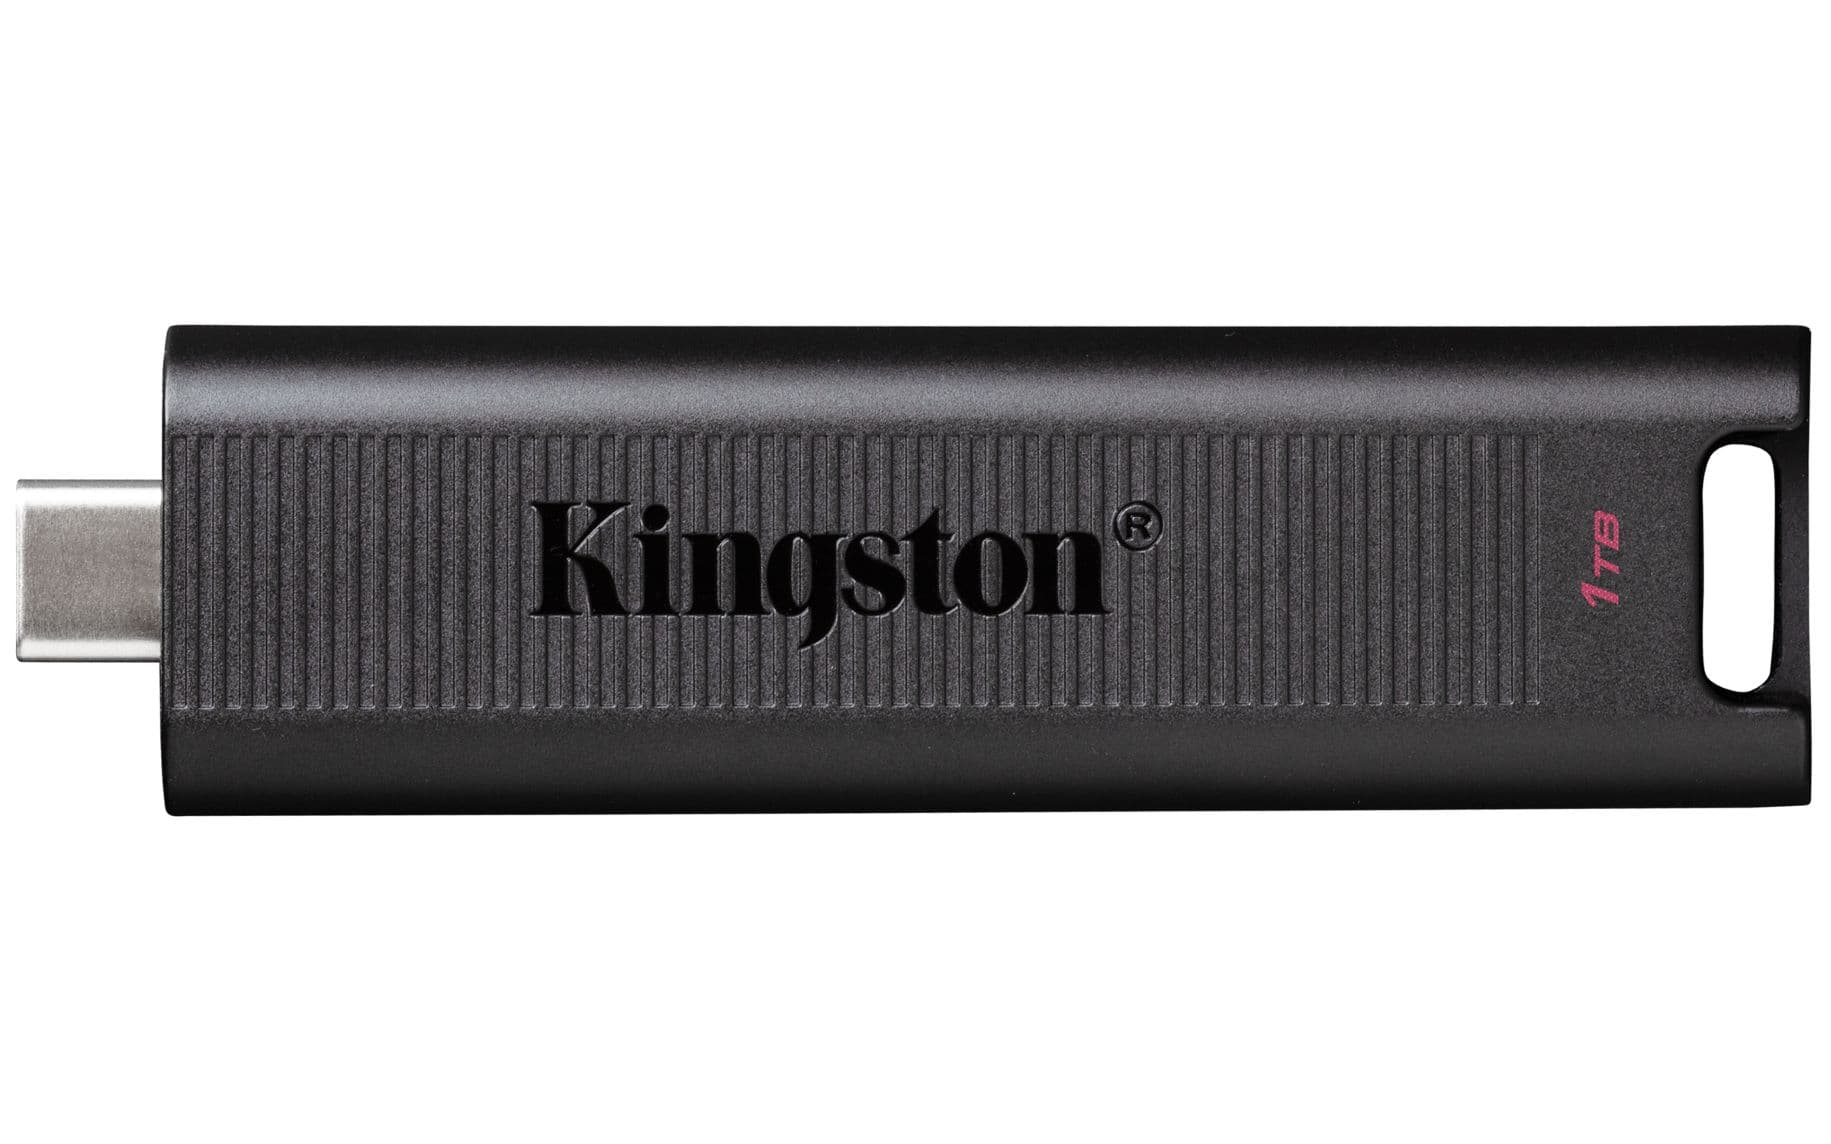 Review: Kingston DTMAX/1TB